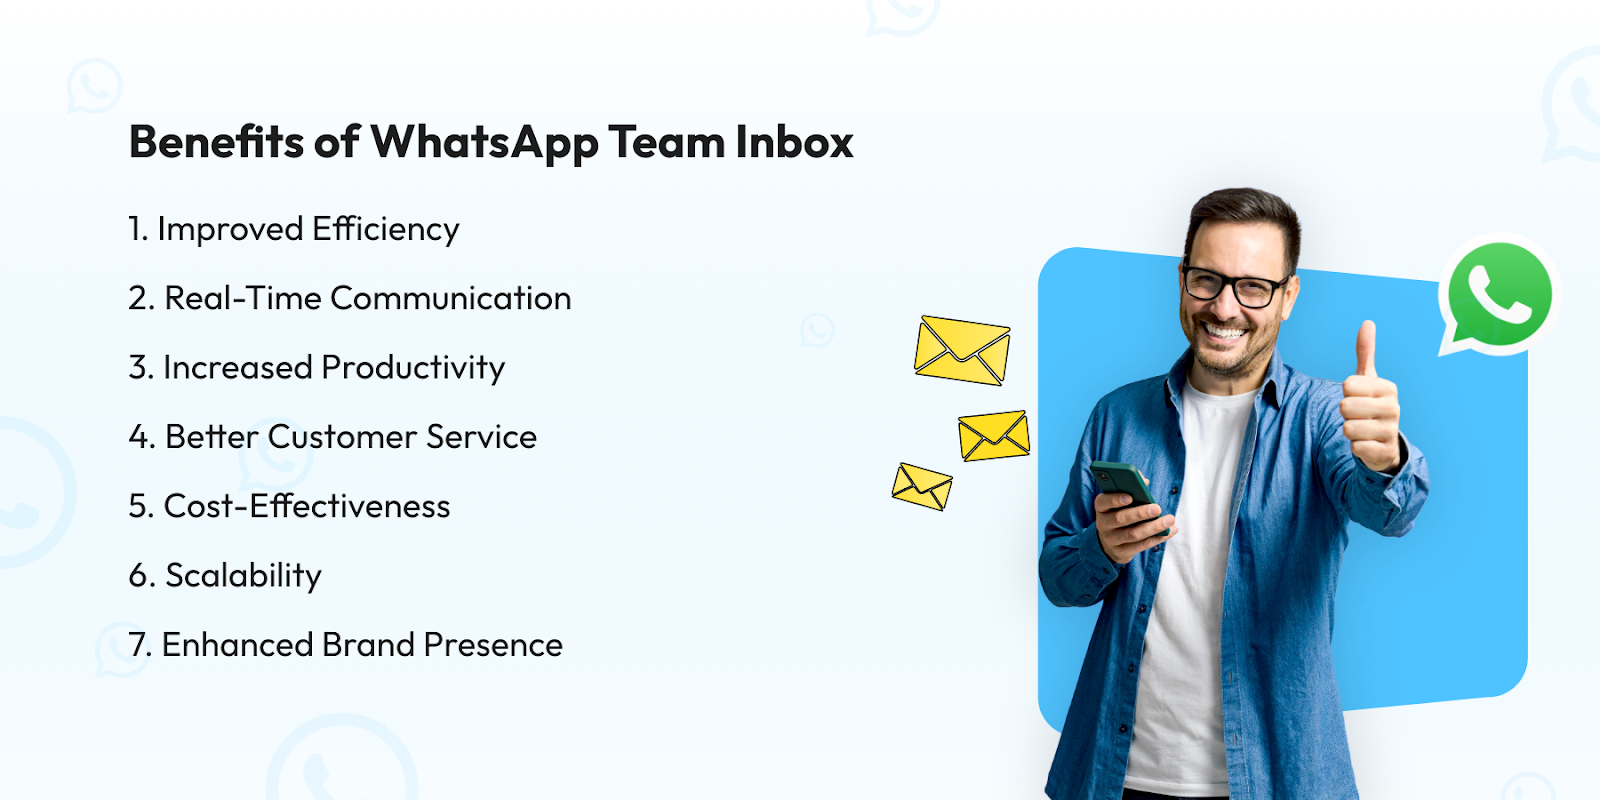 whatsapp team inbox features